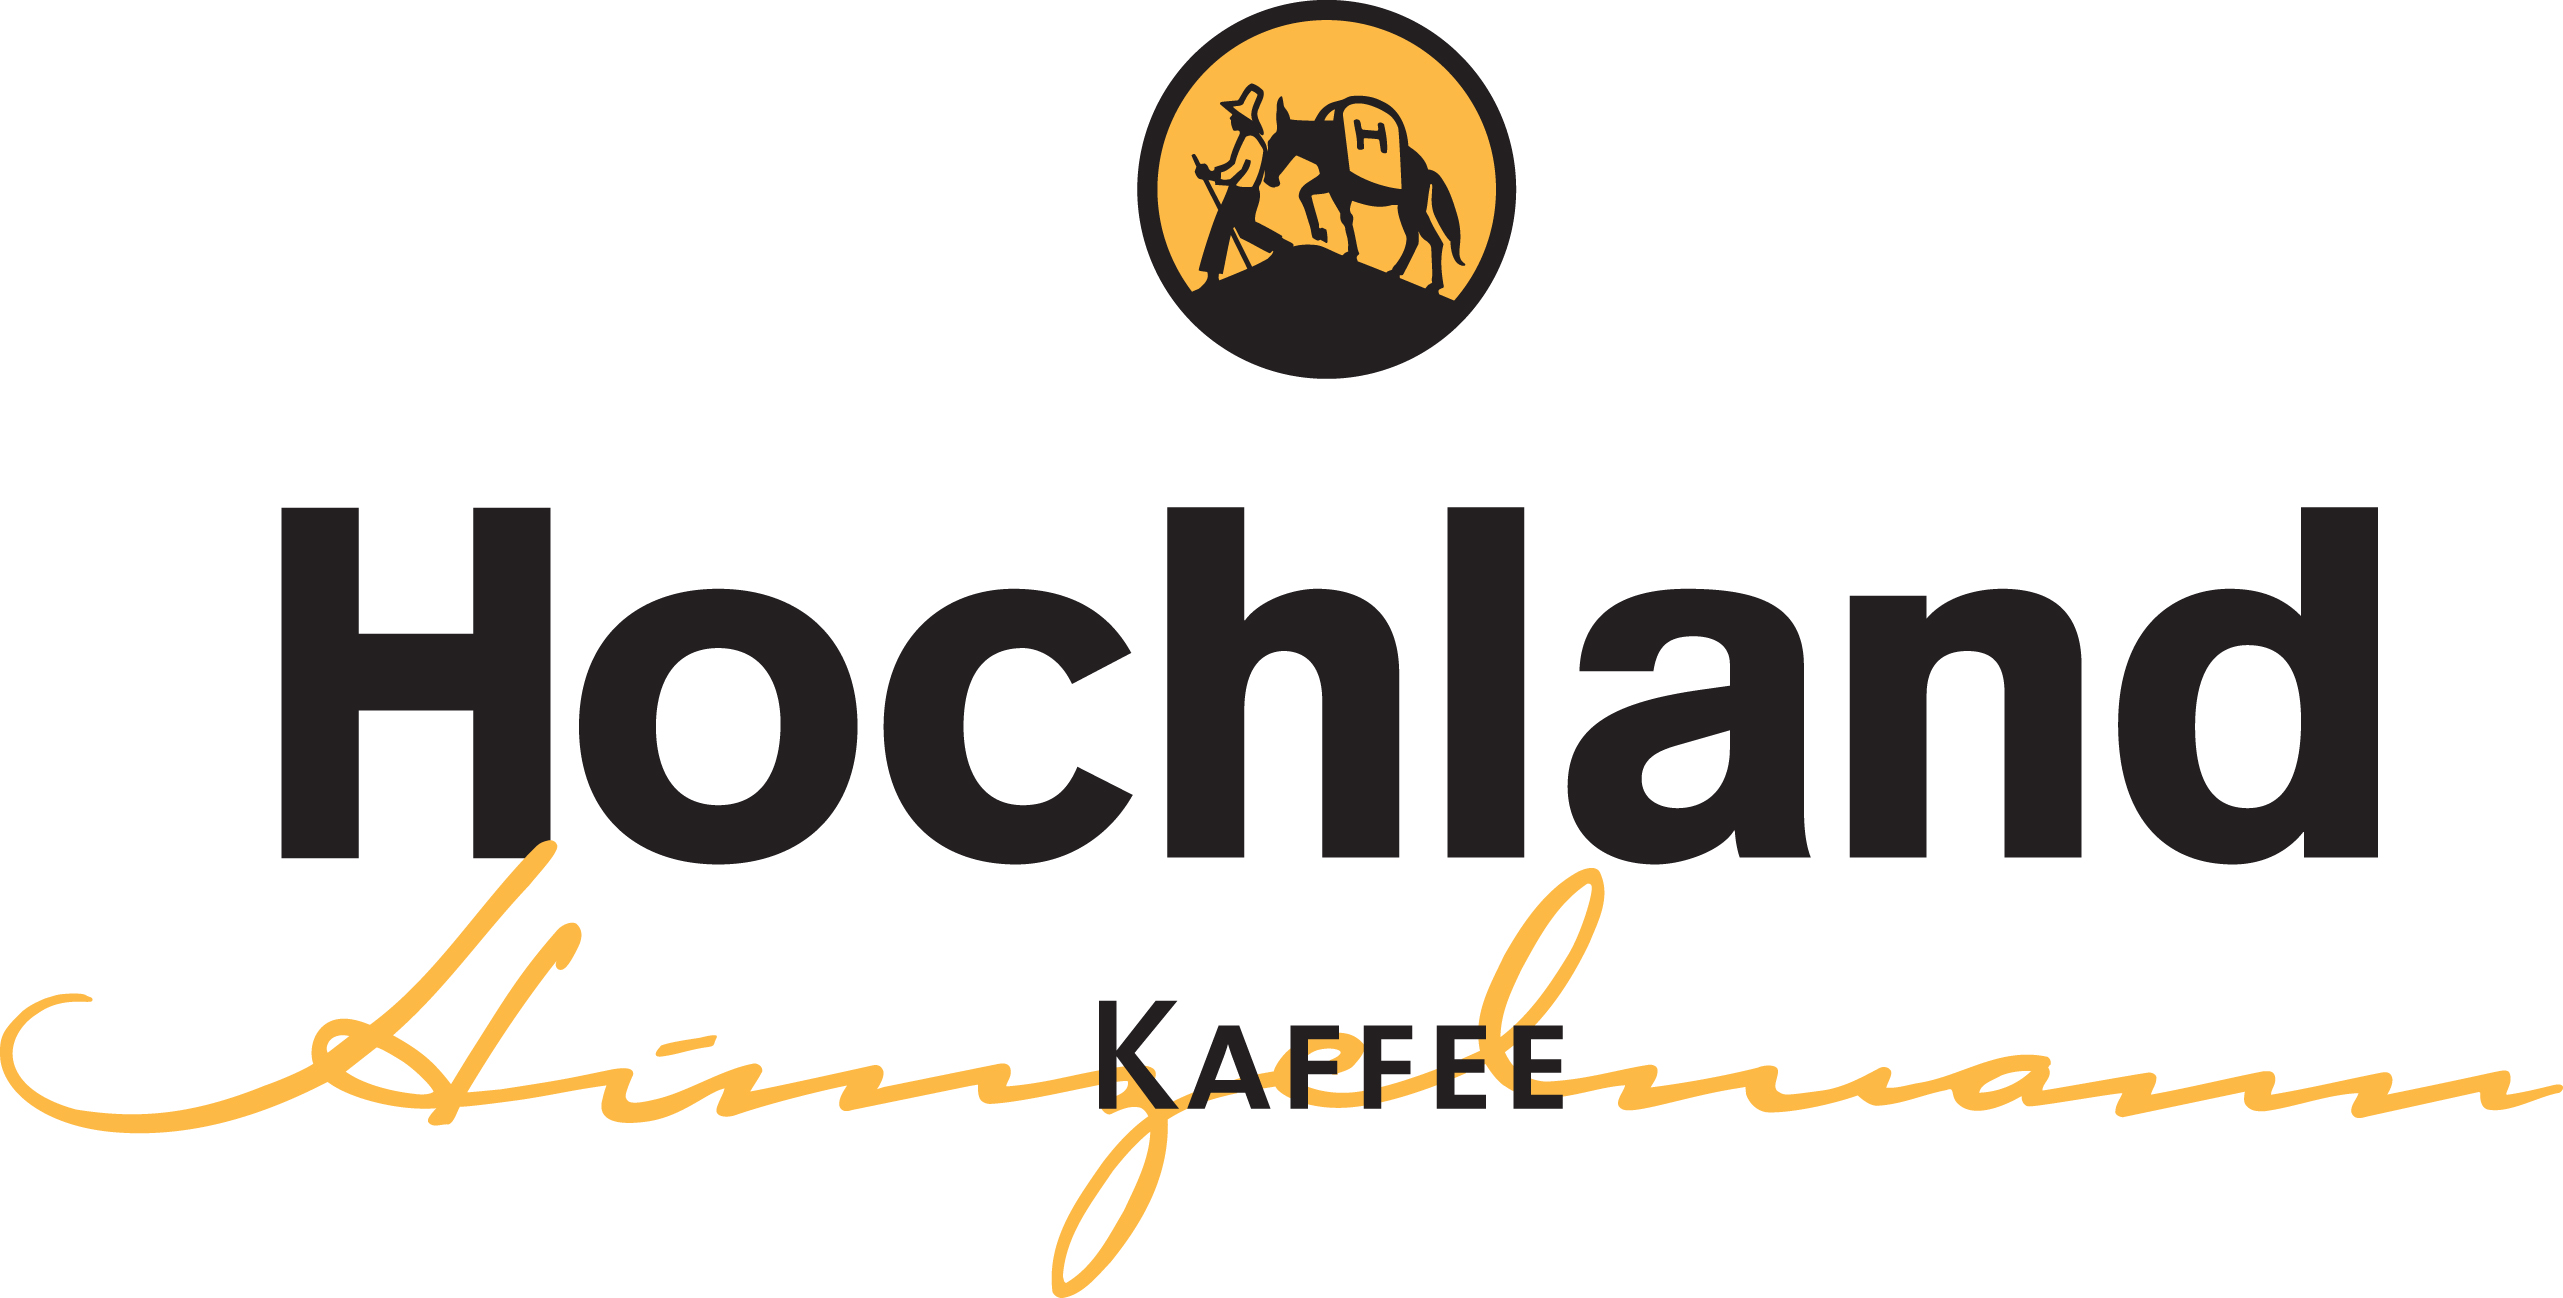 Logo Kaffee 4c Kopie